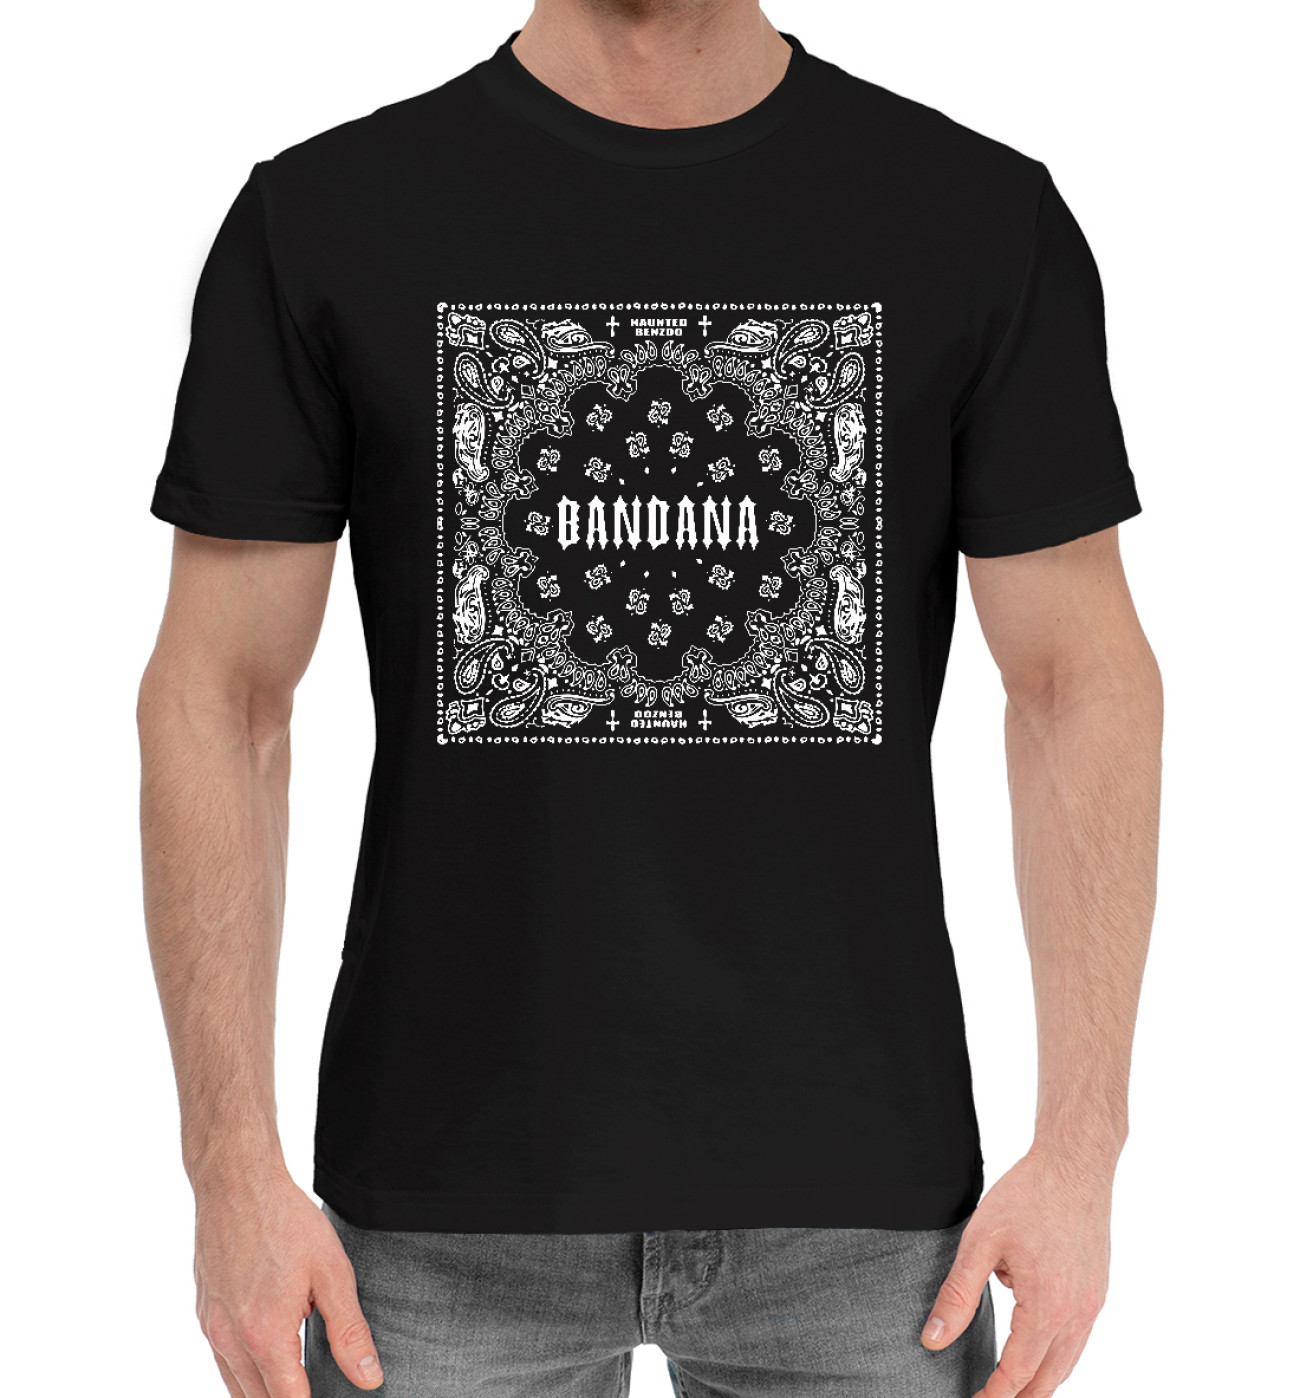 Мужская Хлопковая футболка Bandana, Big baby x Kizaru, артикул: BBT-667440-hfu-2